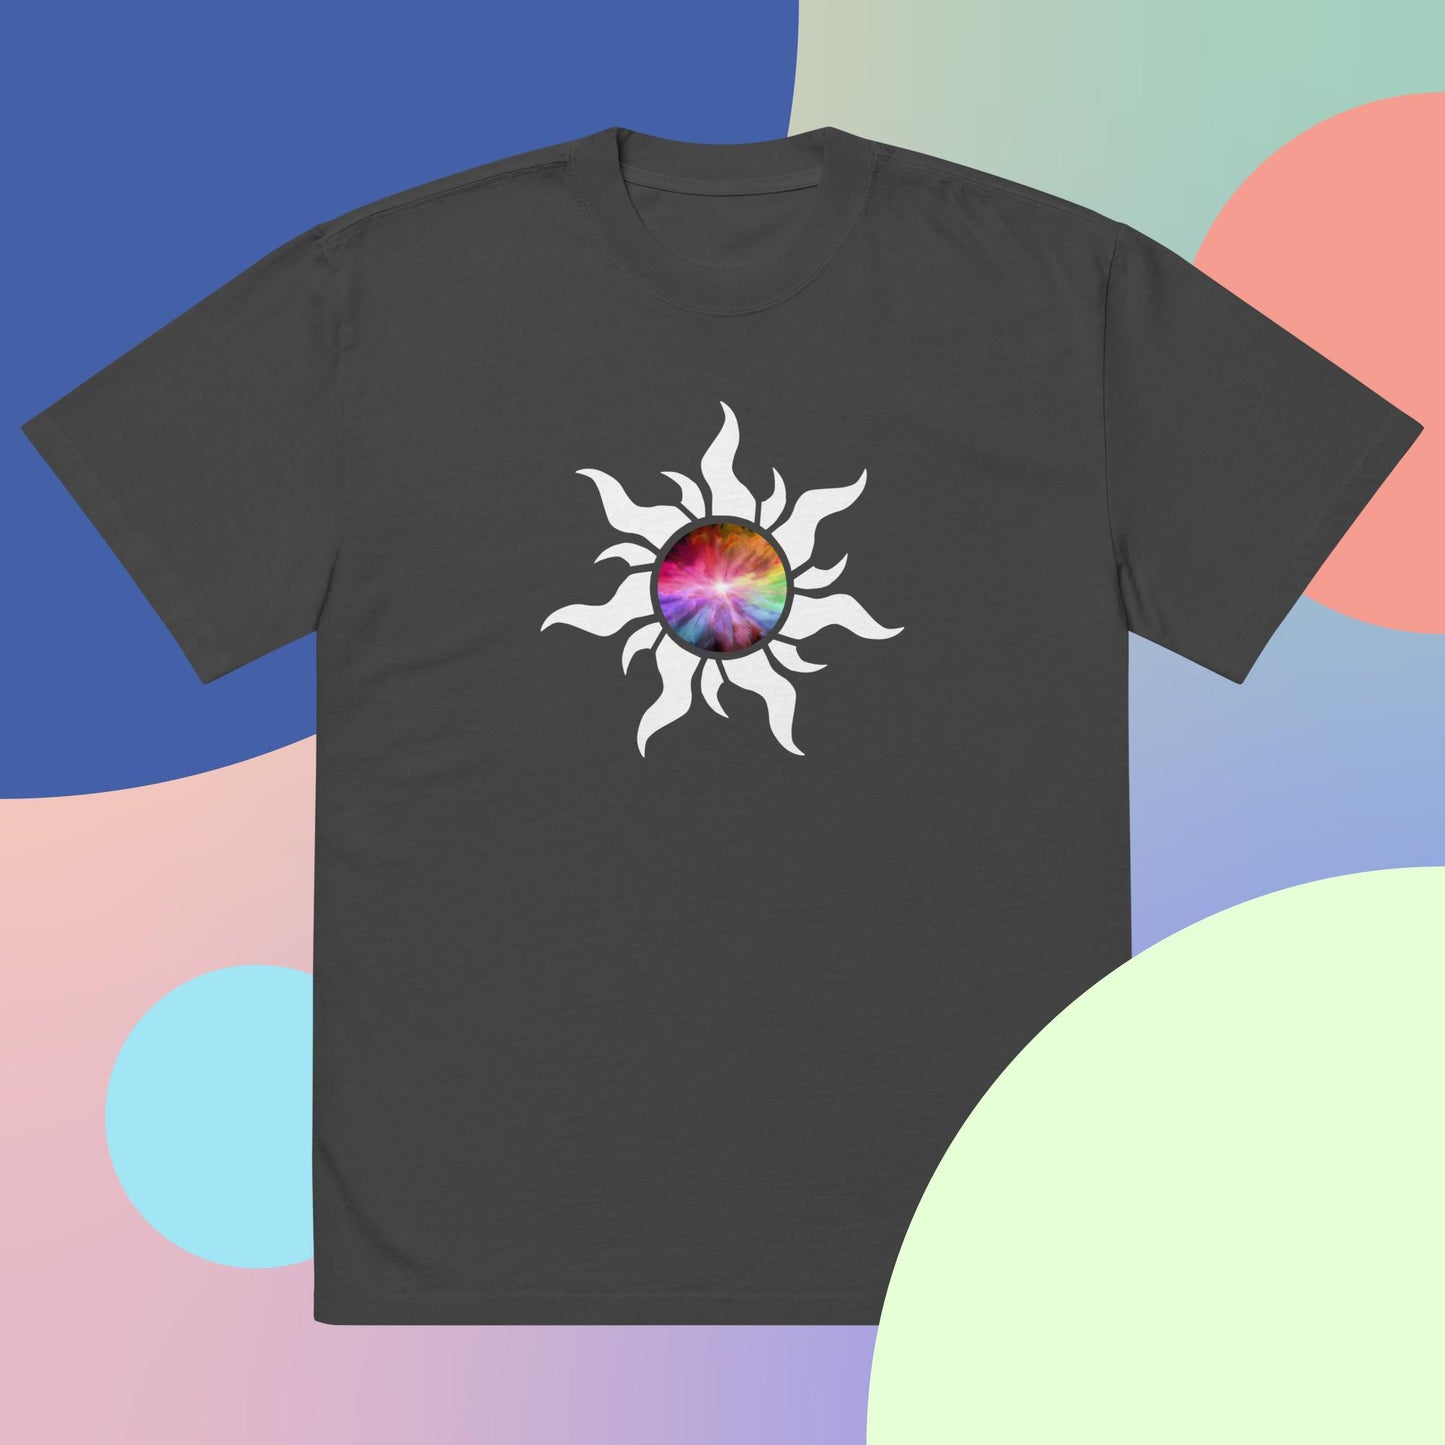 nexus sun t-shirt